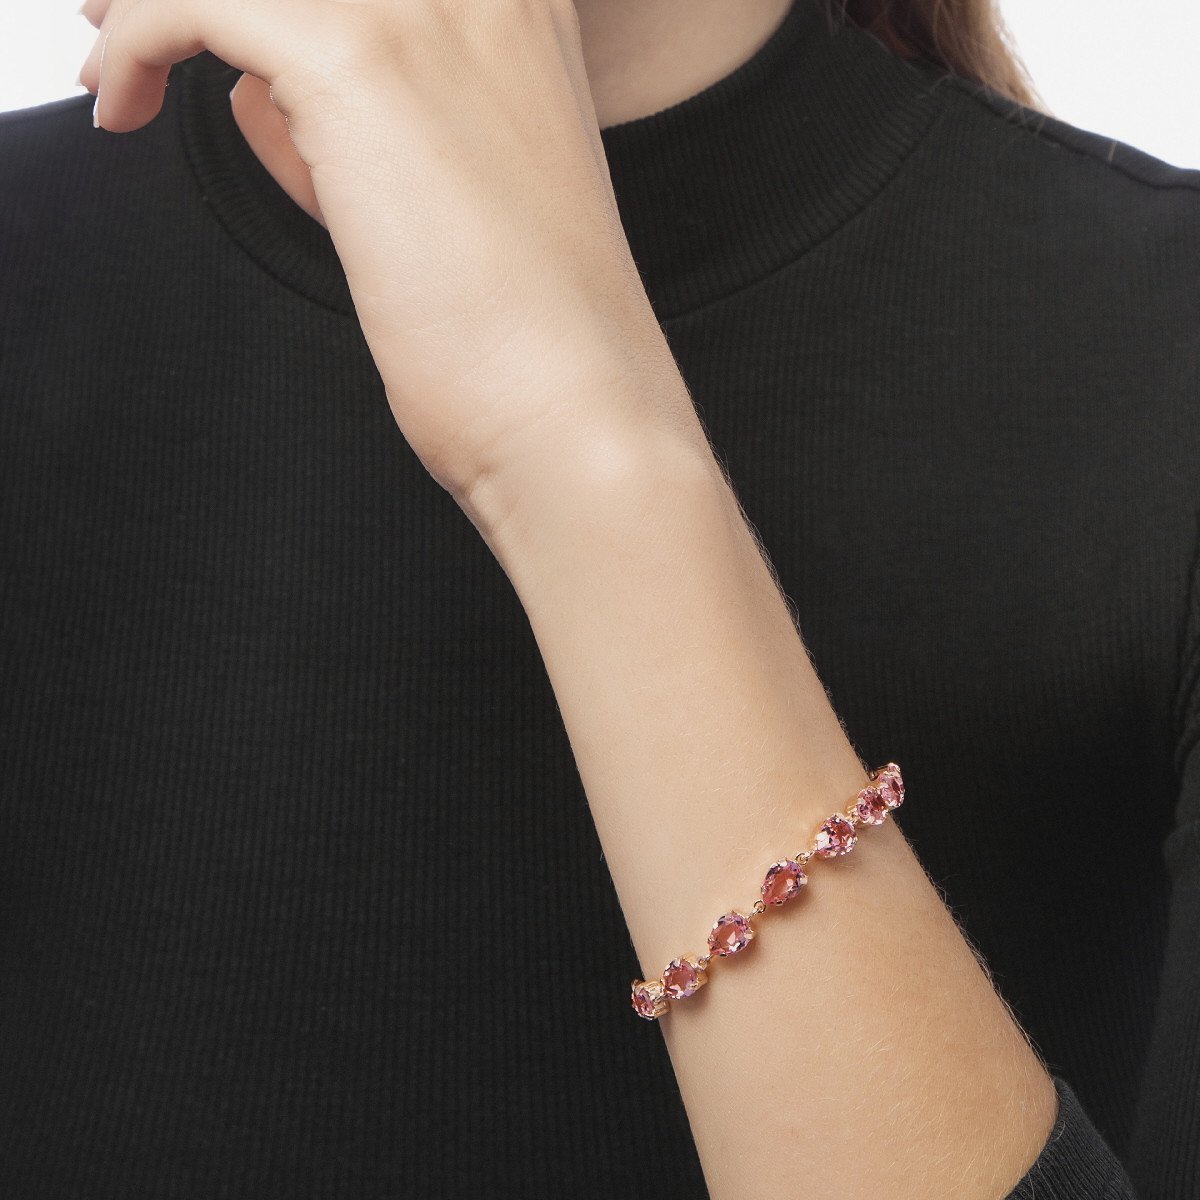 Victoria Cruz gold-plated adjustable bracelet with pink in flower